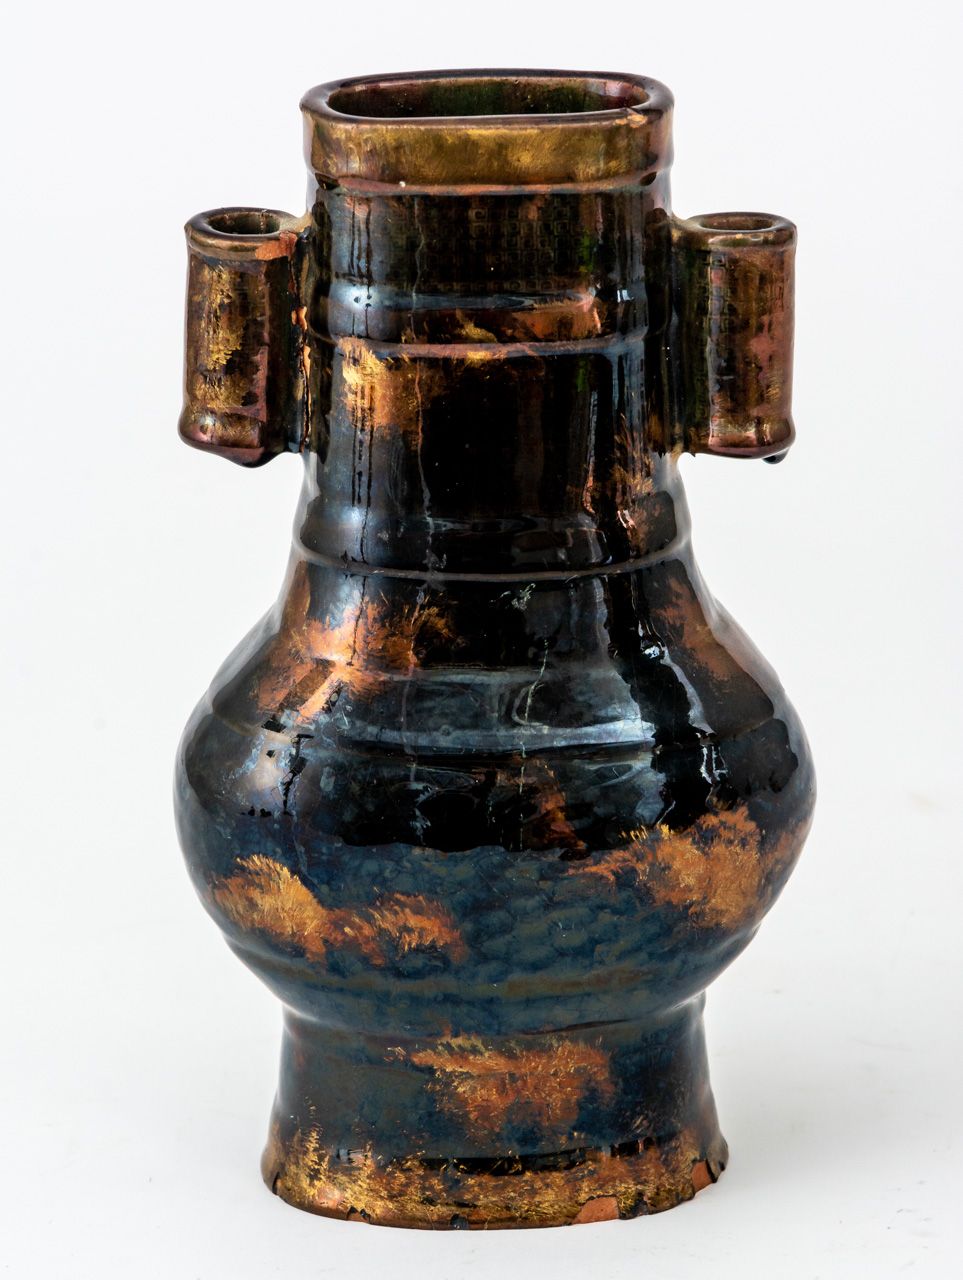 HU-VASE 中国，棕色和青铜色釉面陶器，已修复，有轻微破损，19世纪。

20厘米高